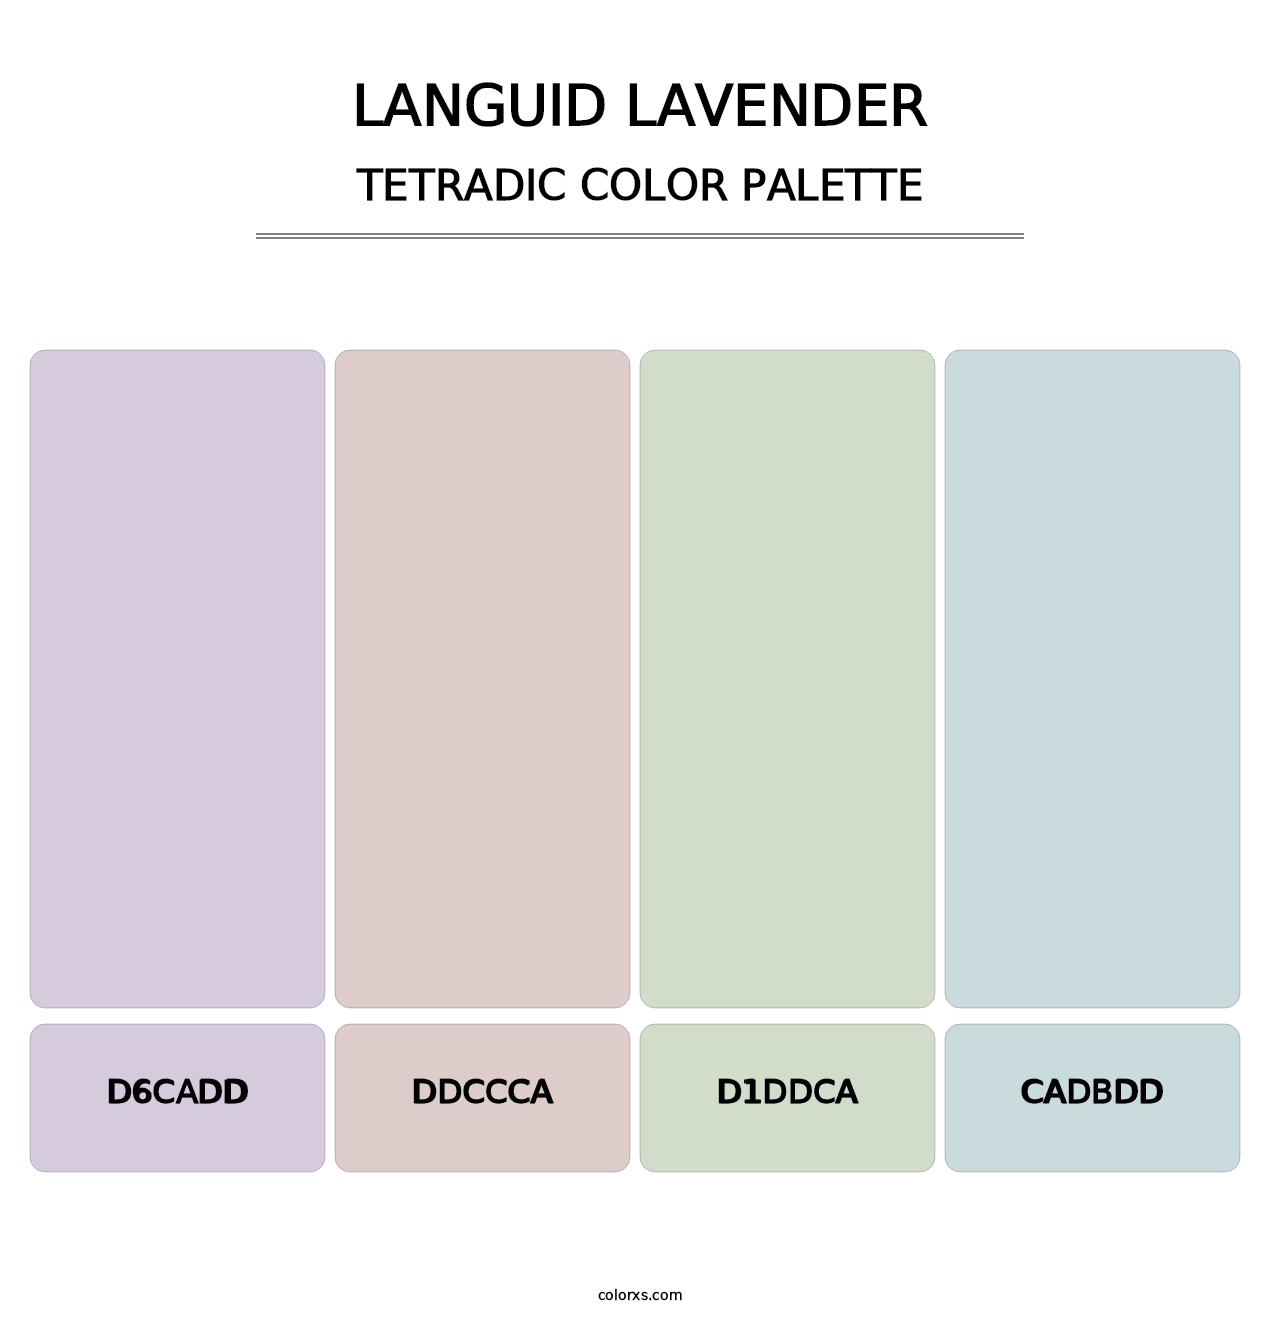 Languid Lavender - Tetradic Color Palette